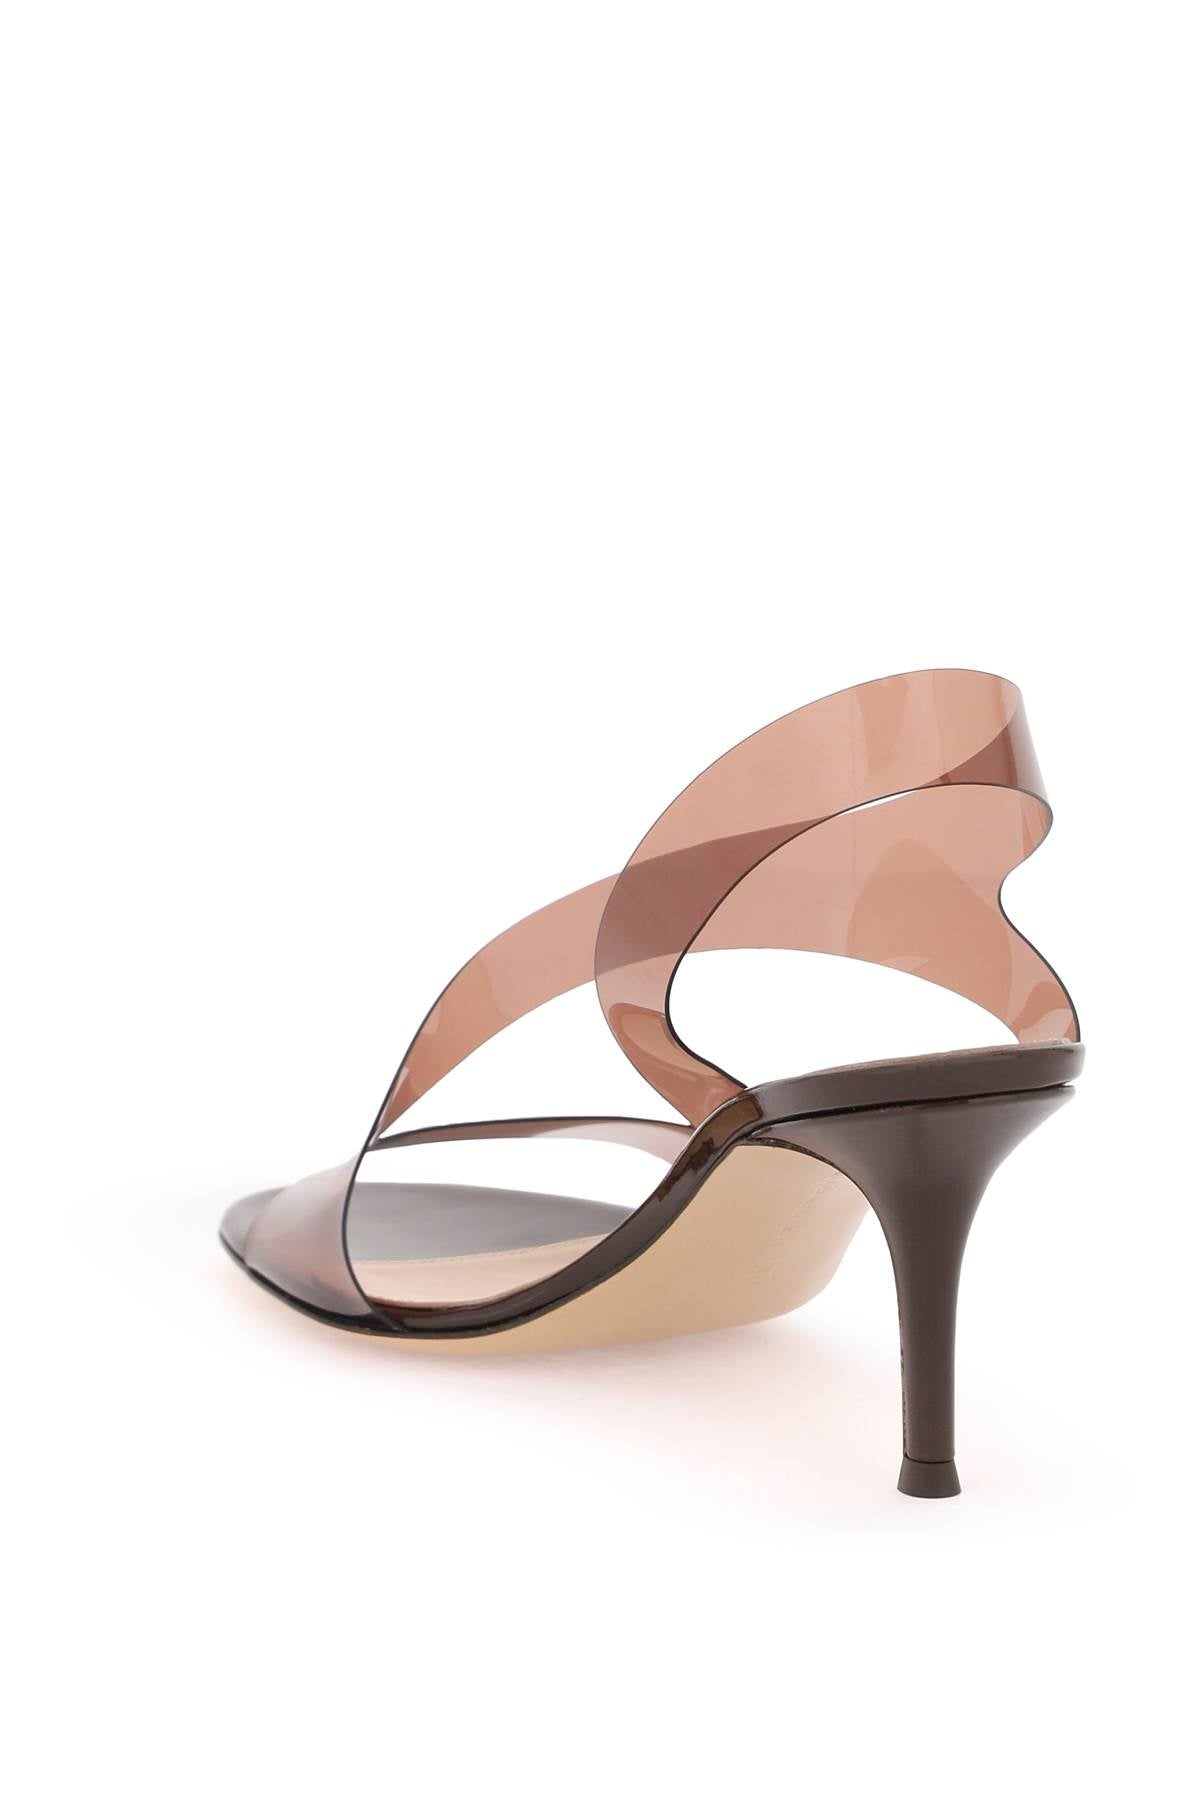 Gianvito rossi motropolis sandals-women > shoes > sandals-Gianvito Rossi-Urbanheer